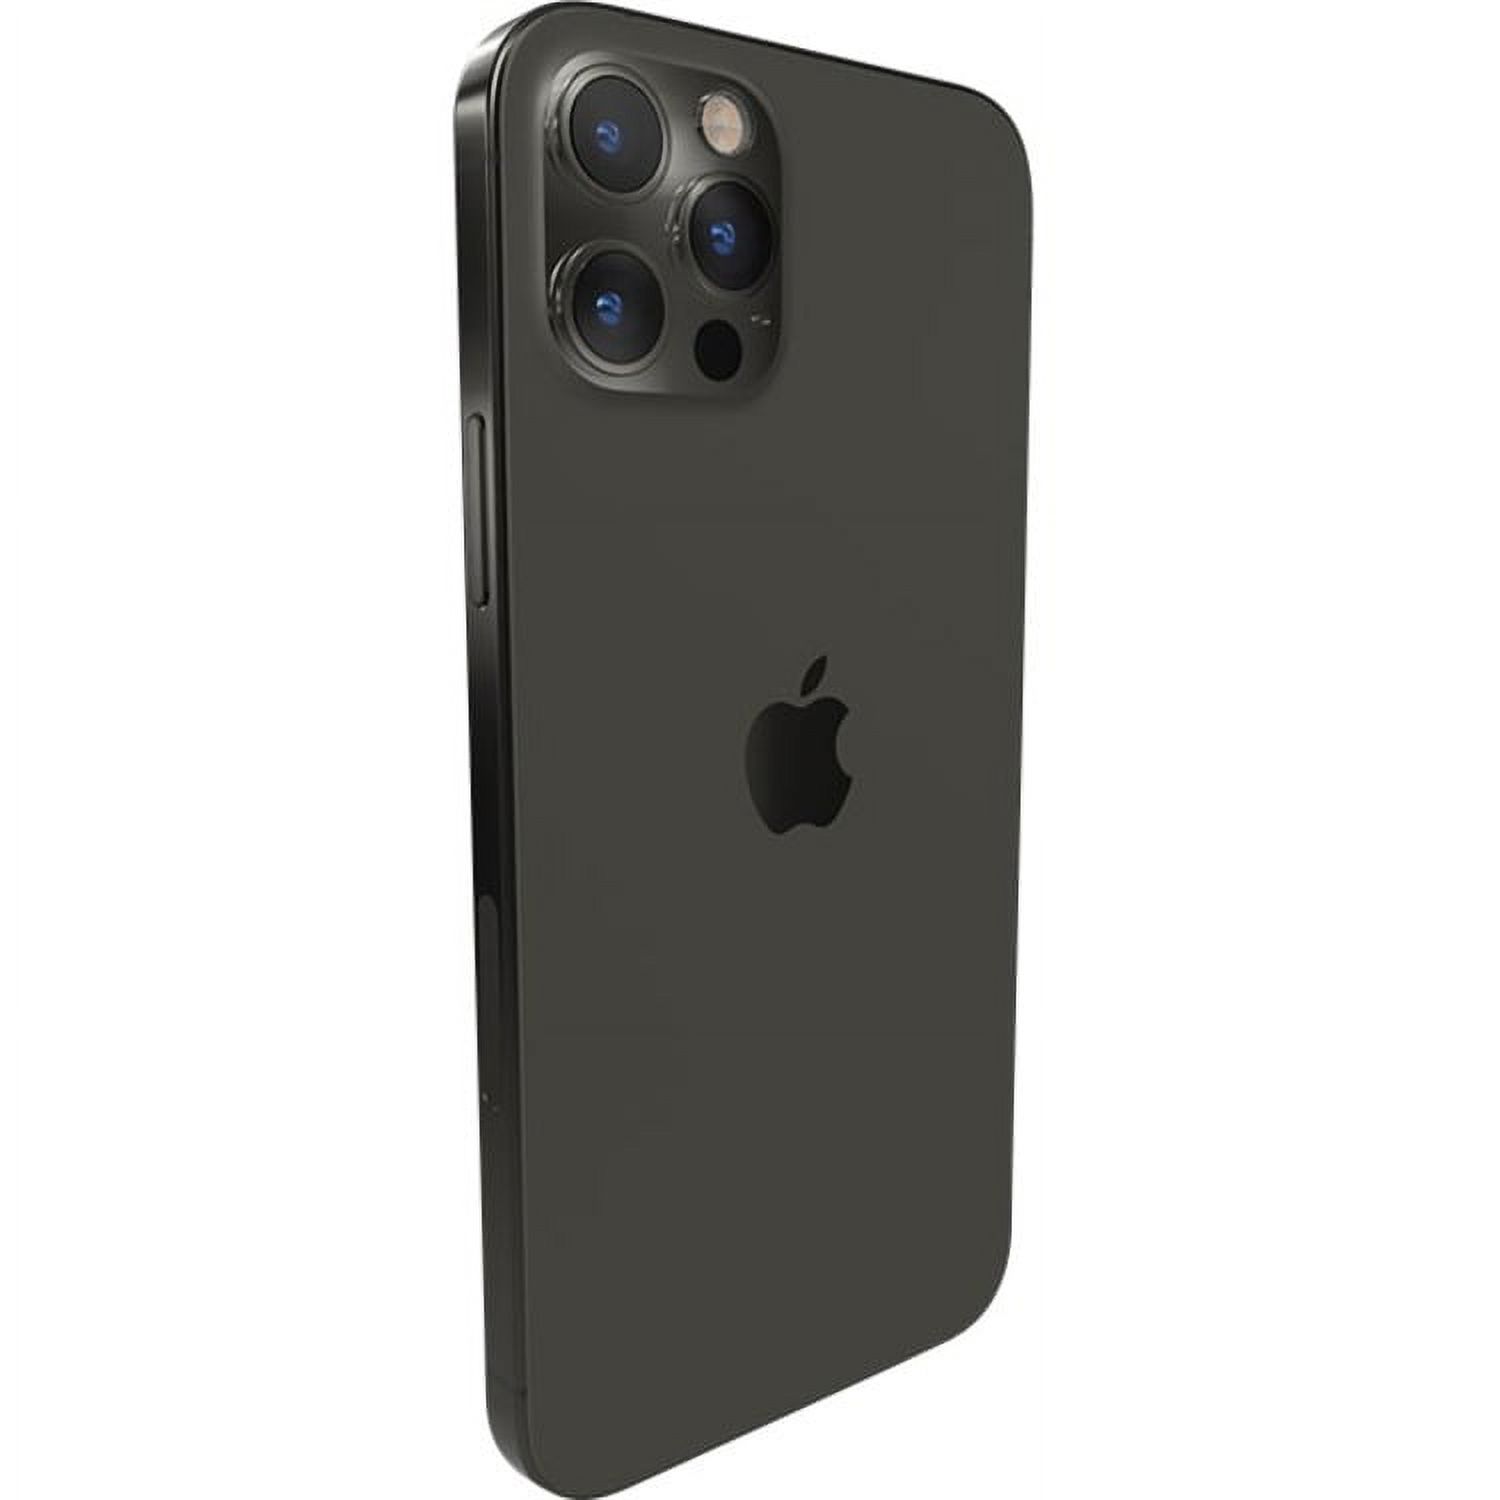 Restored Apple iPhone 12 Pro 128GB Graphite Smartphone (Refurbished) - image 4 of 11